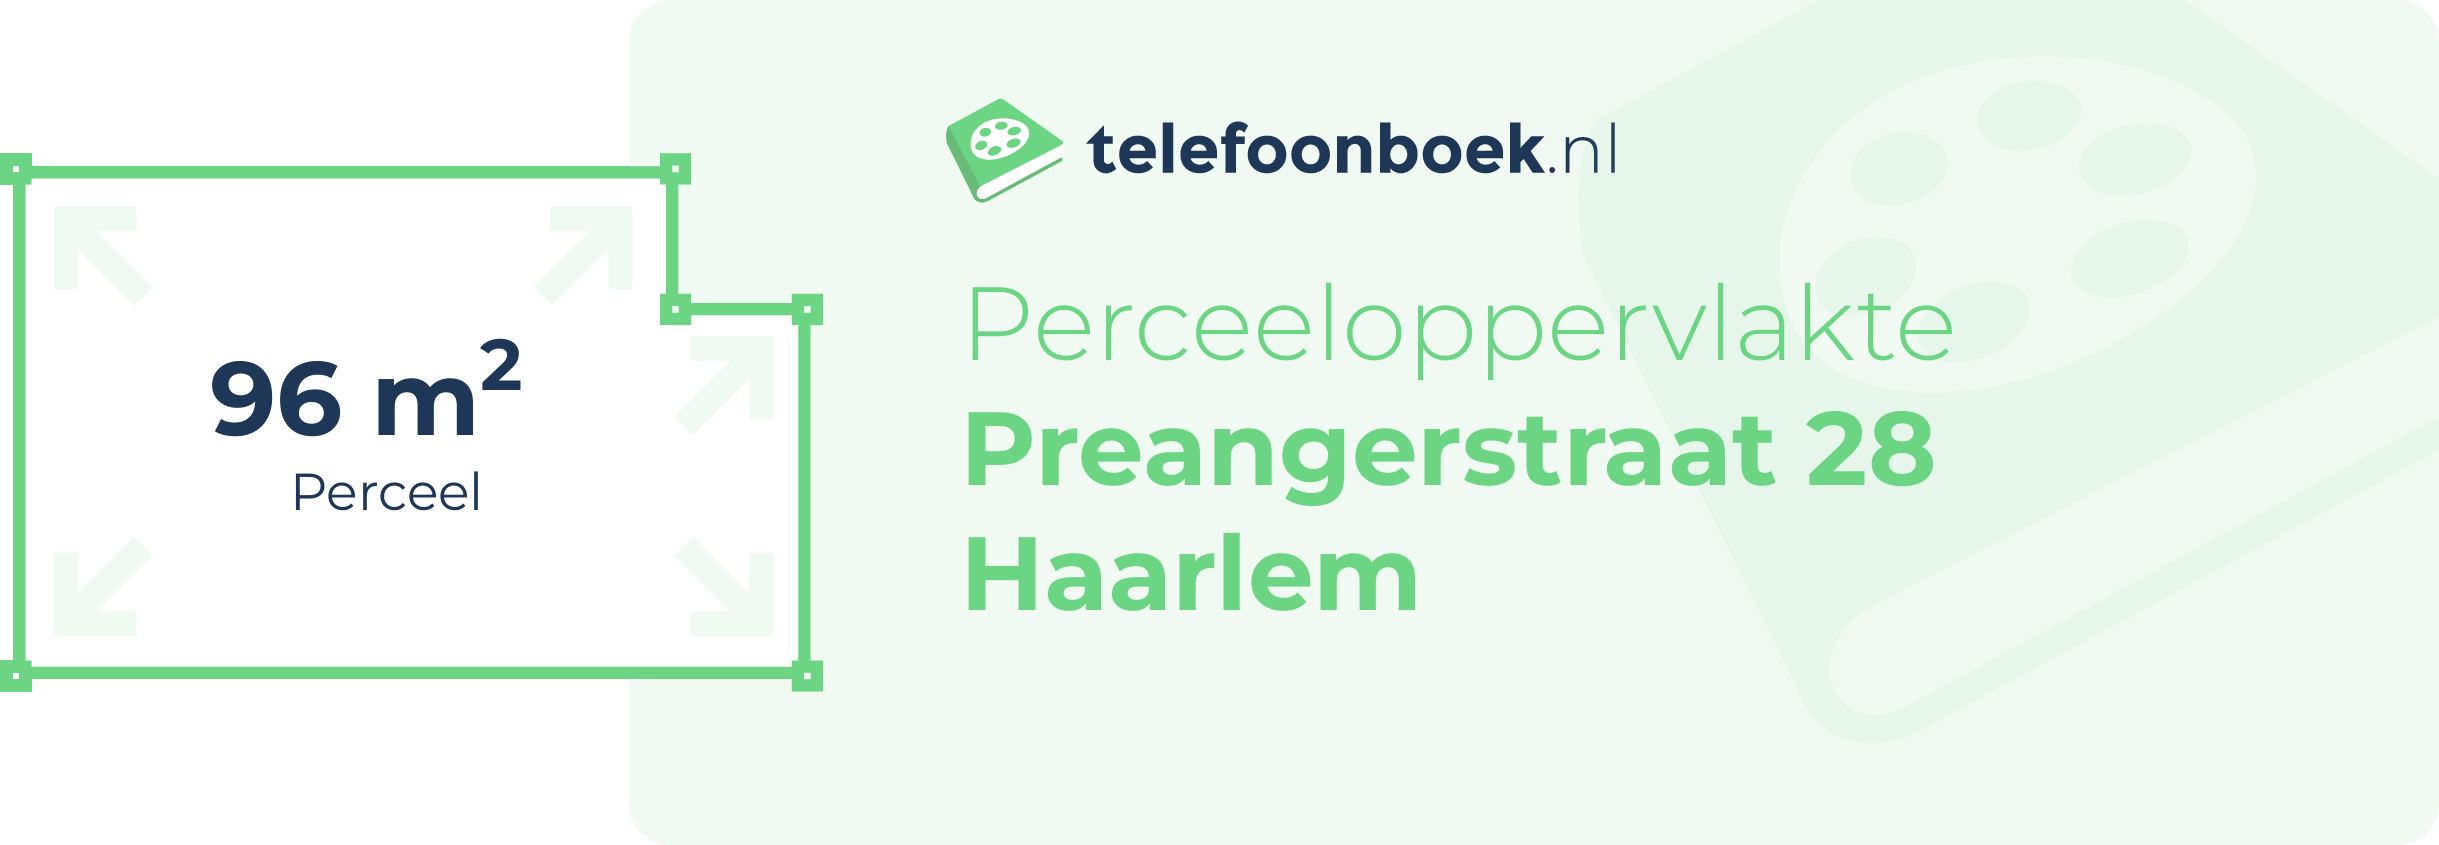 Perceeloppervlakte Preangerstraat 28 Haarlem